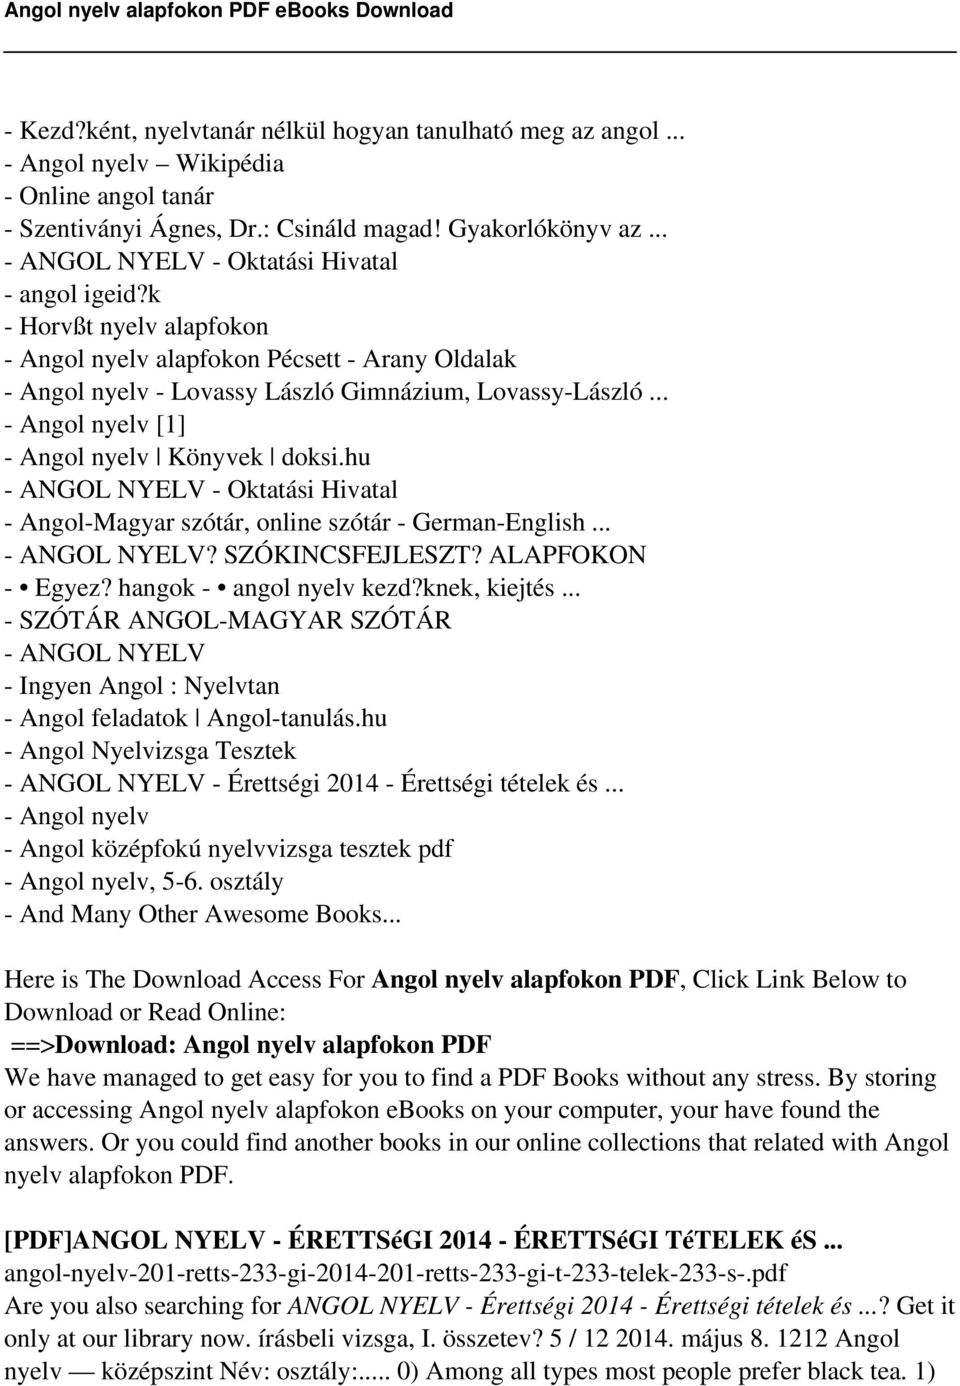 Angol nyelv alapfokon - PDF Free Download